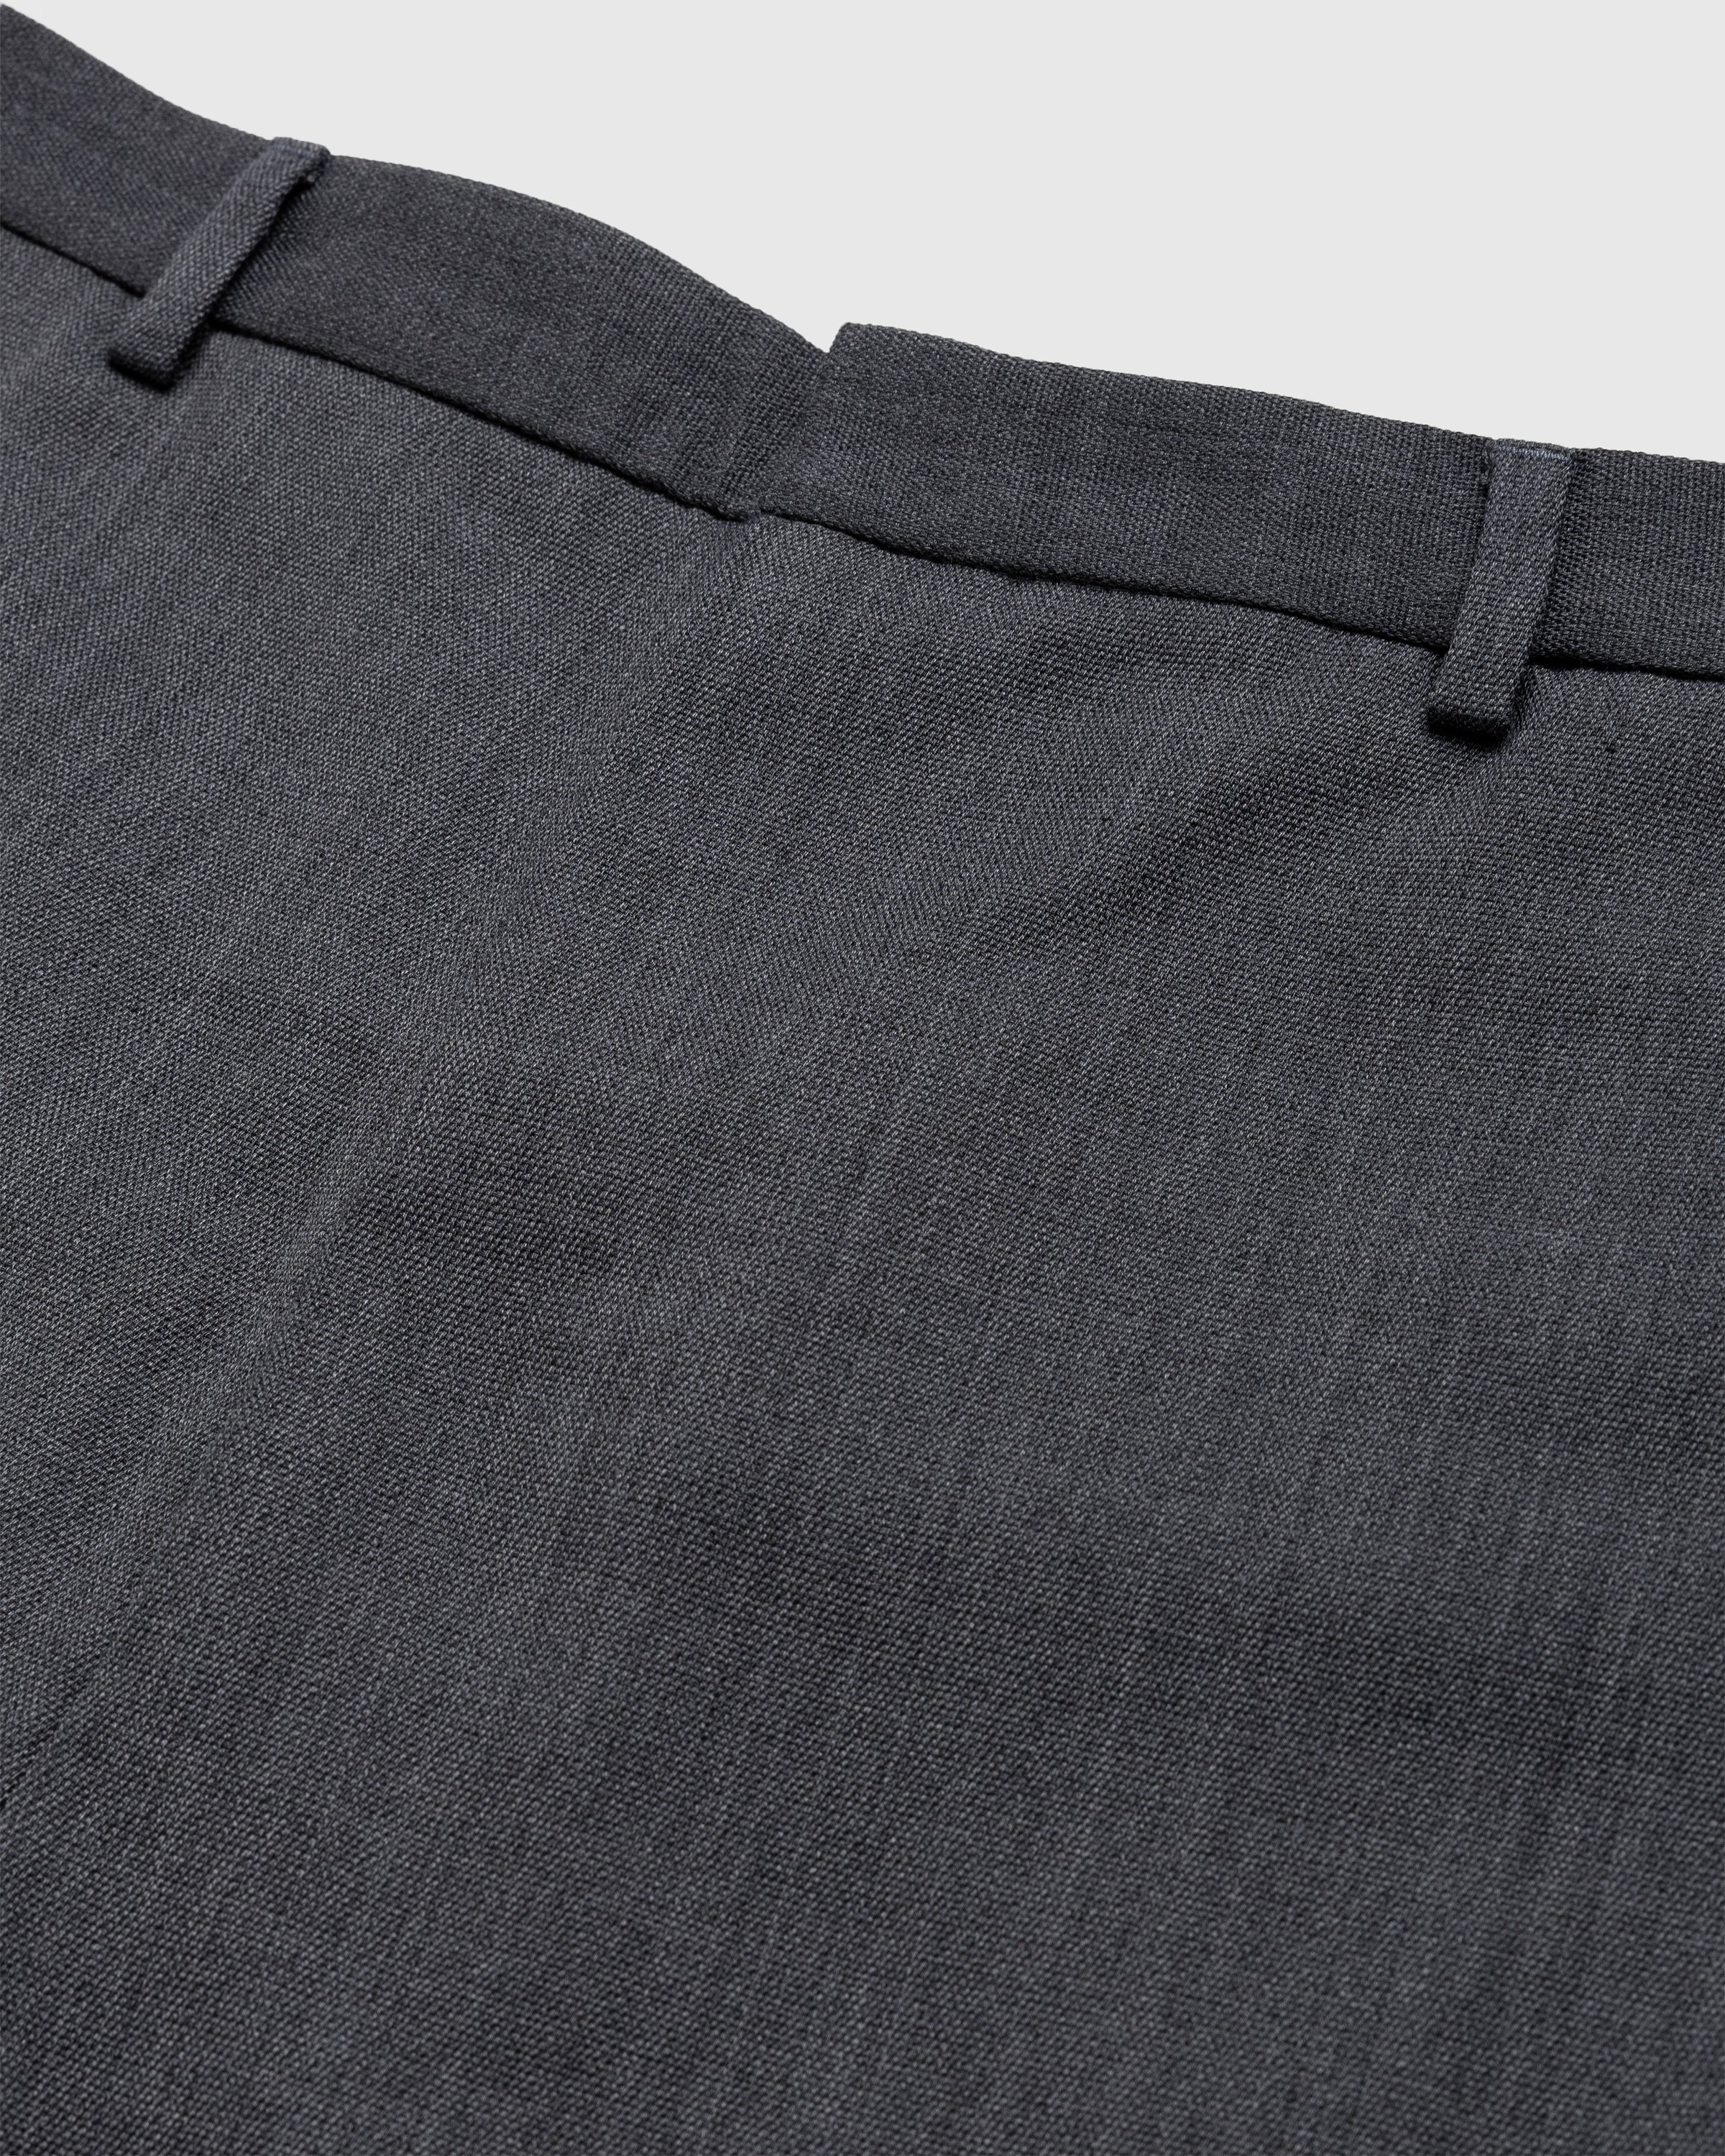 Acne Studios - Wool Blend Tailored Trousers Dark Grey Melange - Clothing - Grey - Image 5